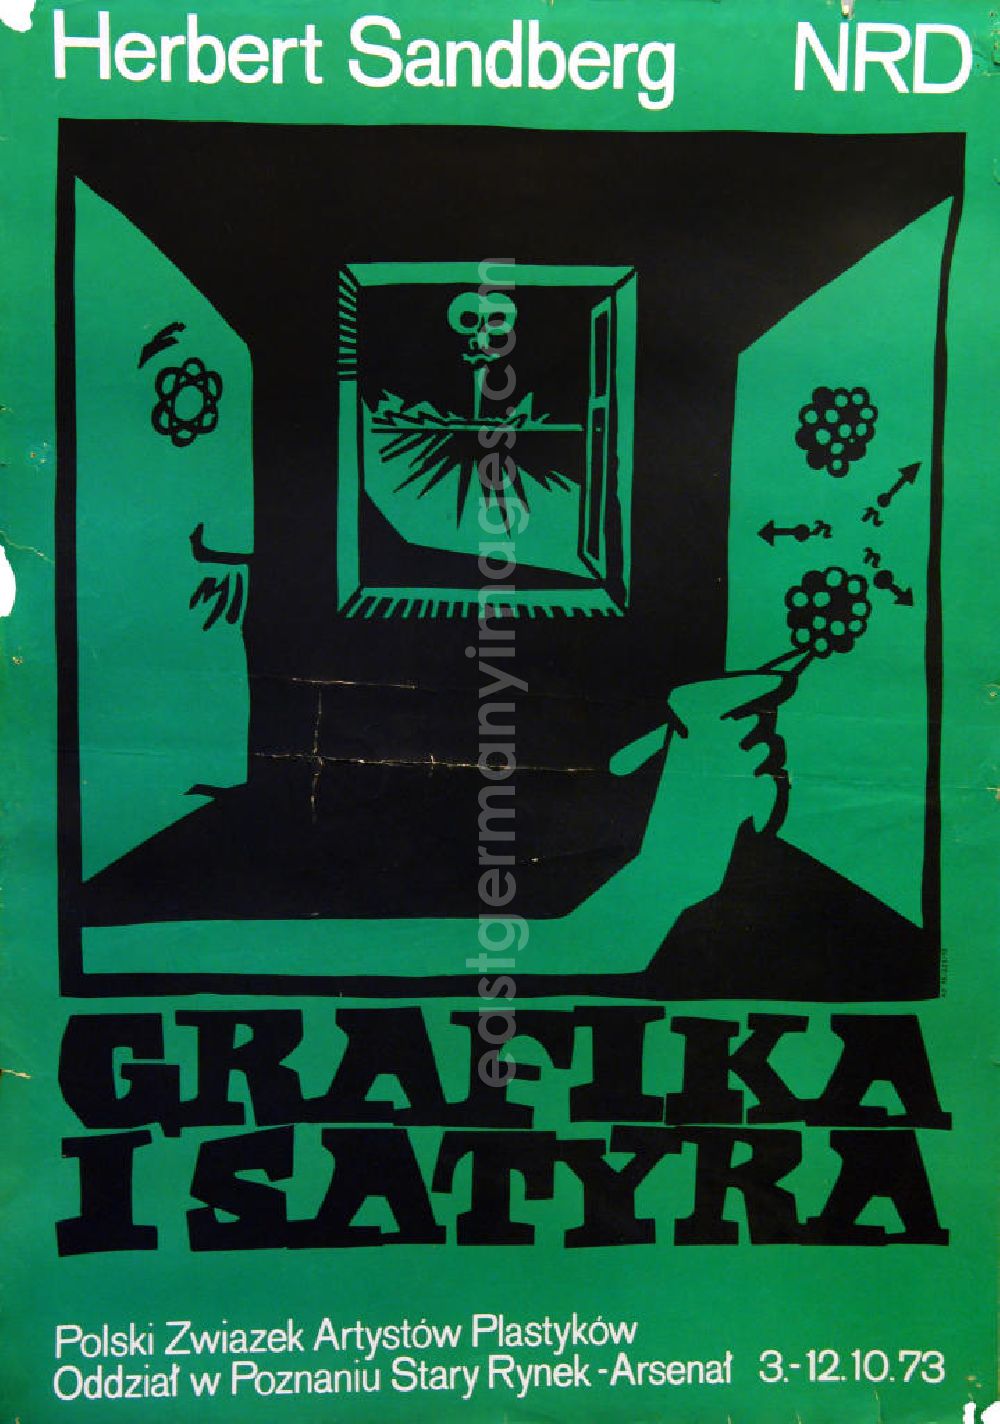 GDR picture archive: Berlin - Plakat der Ausstellung Herbert Sandberg NRD, Grafika i Satyra vom 03.-12.10.1973 Polski Zwiazek Artistów Plastików, 59,0x84,